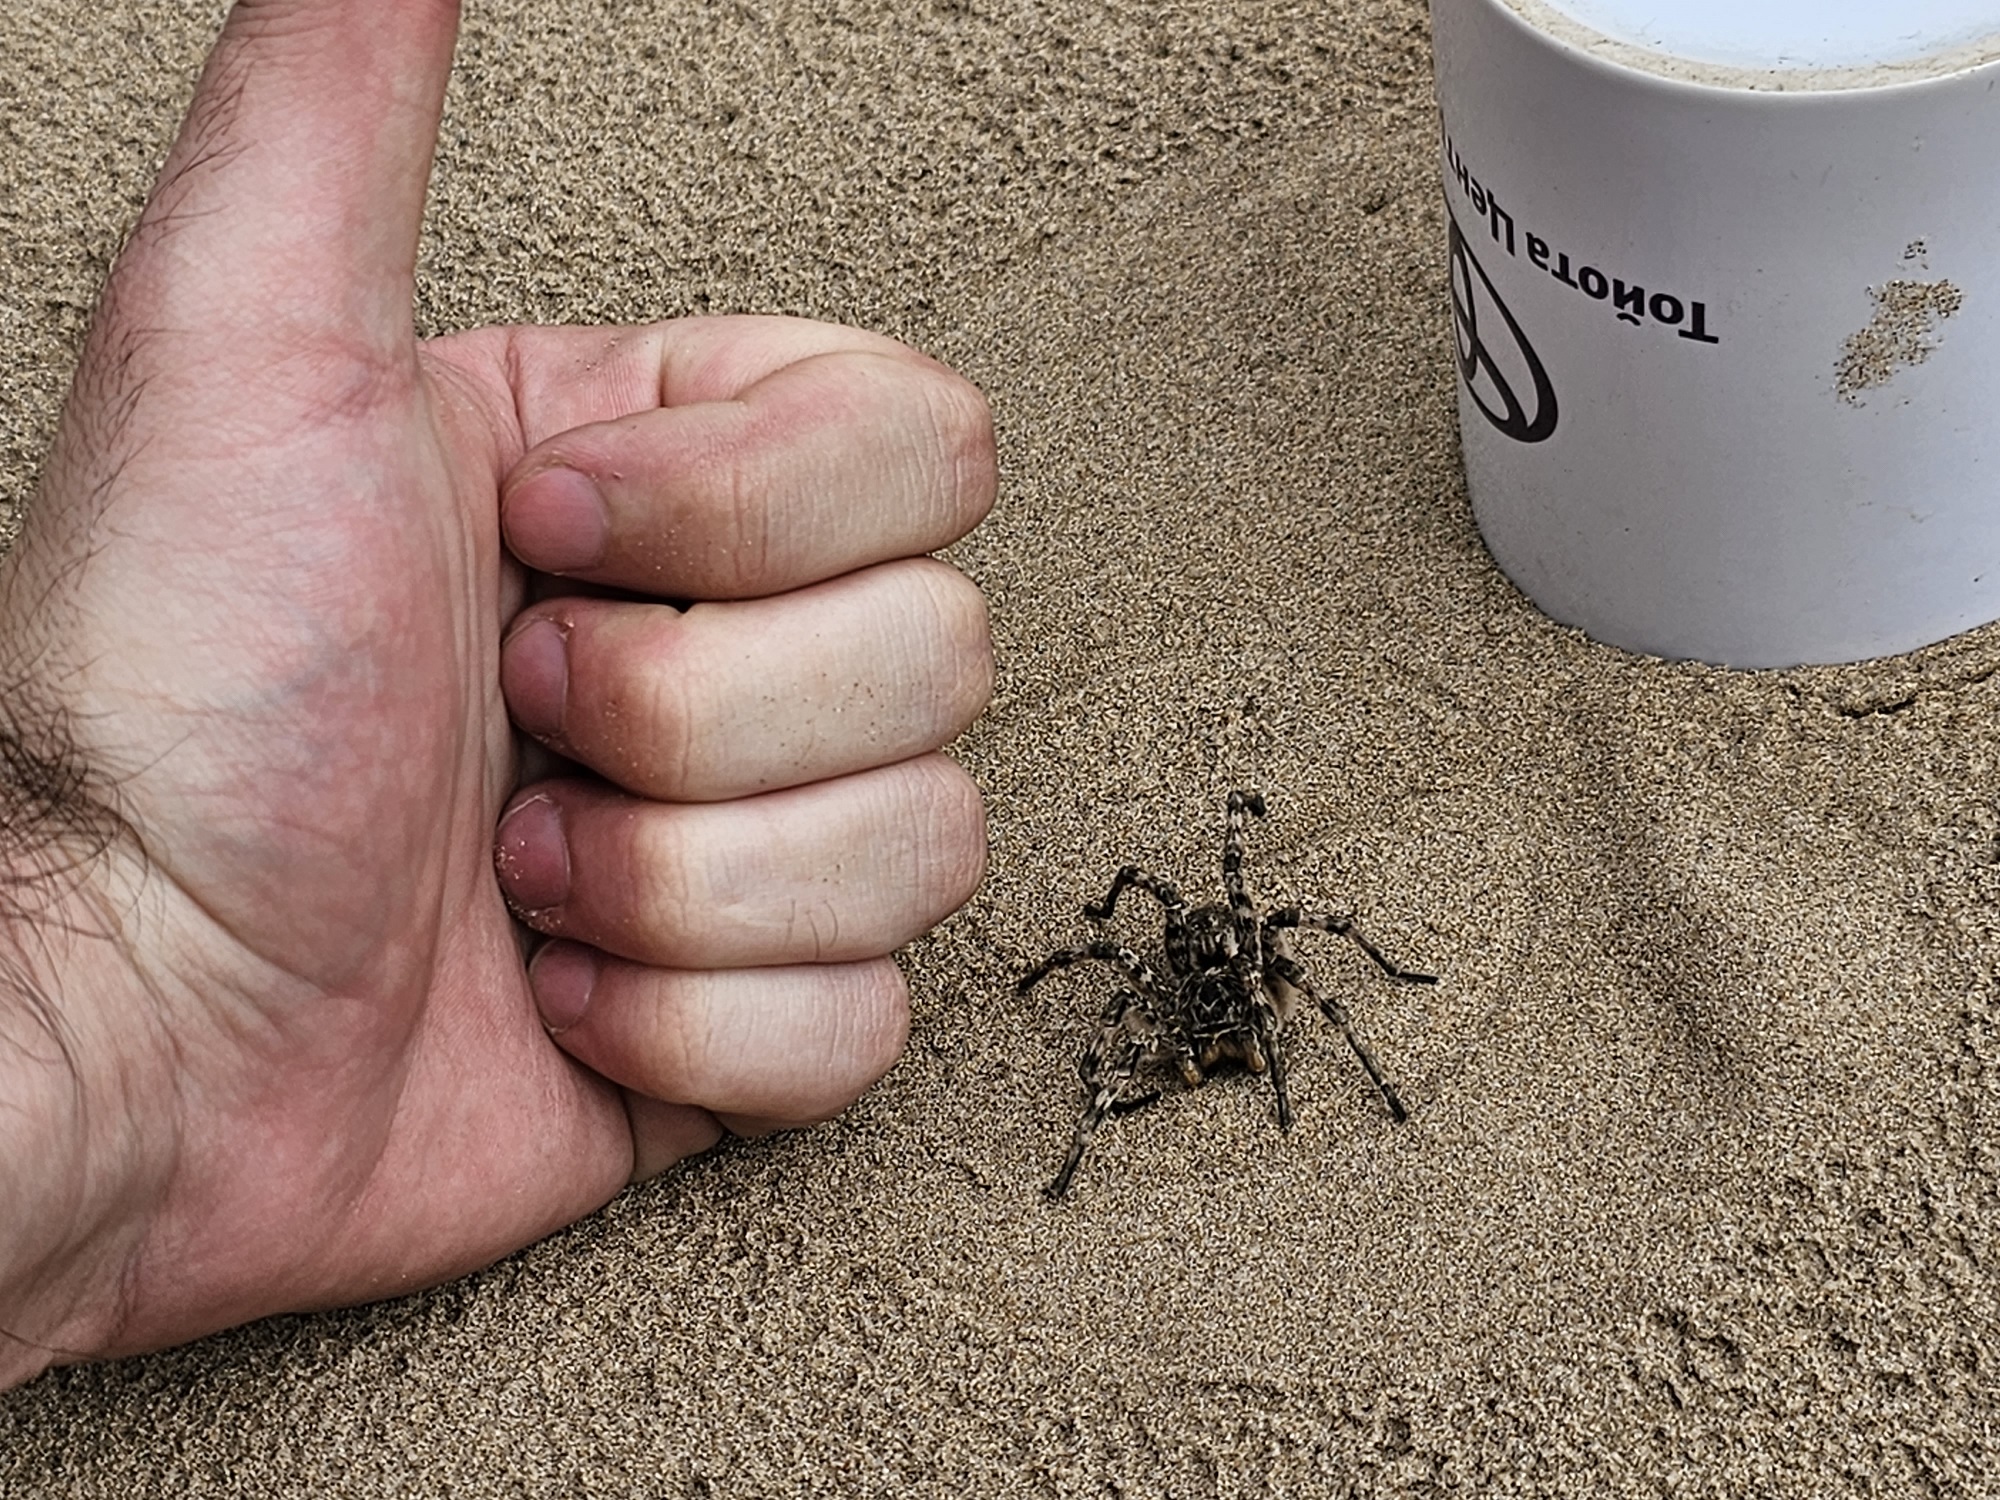 южнорусский тарантул в беларуси фото